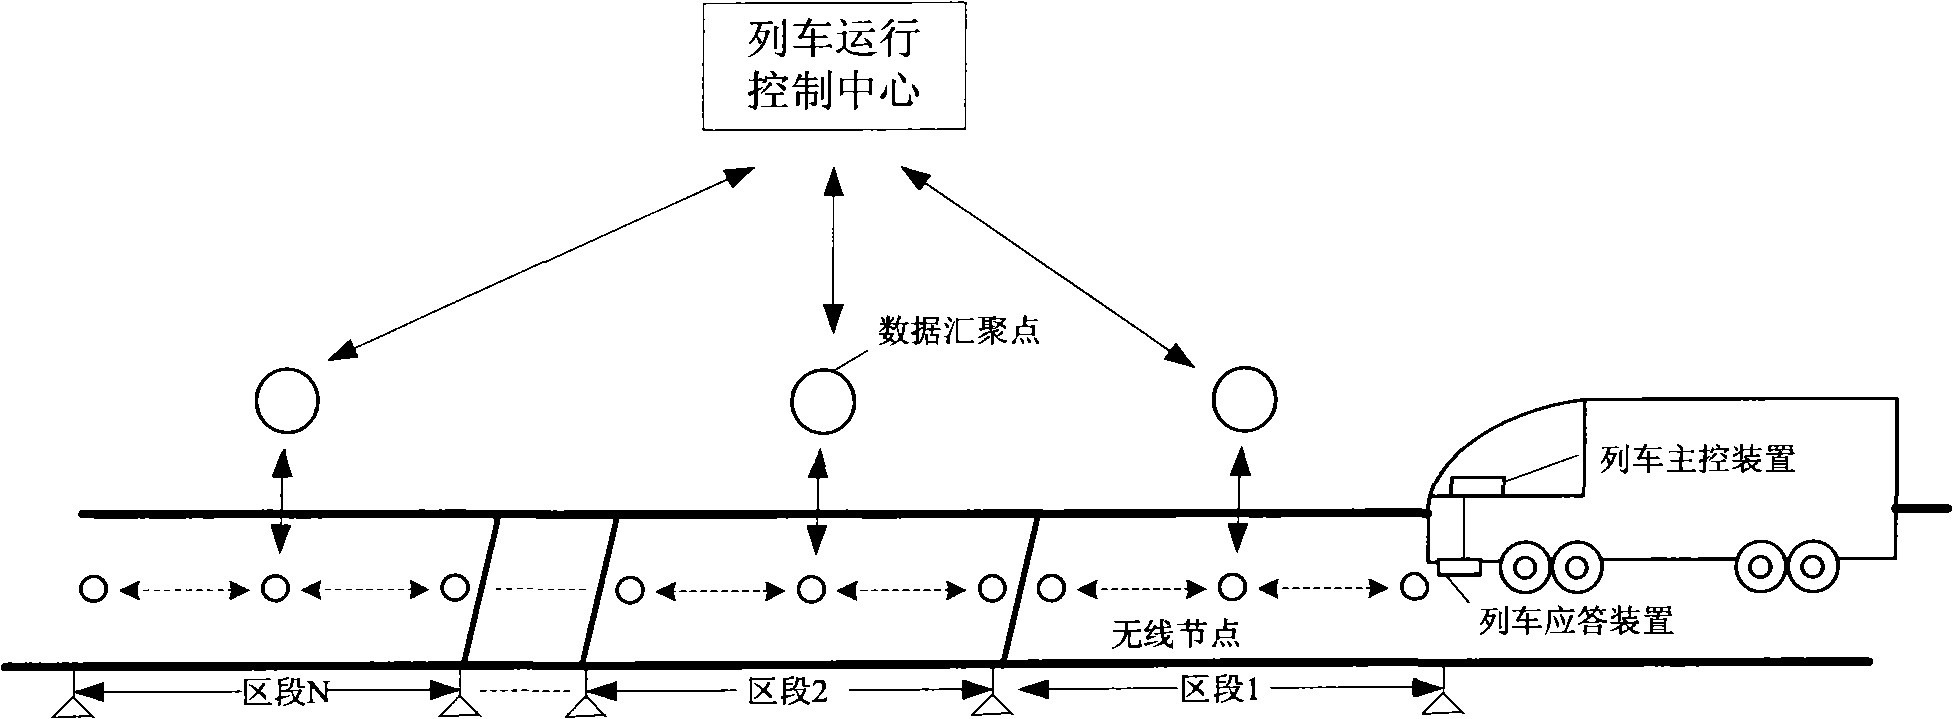 Train temporary speed-limiting method based on self-organizing network